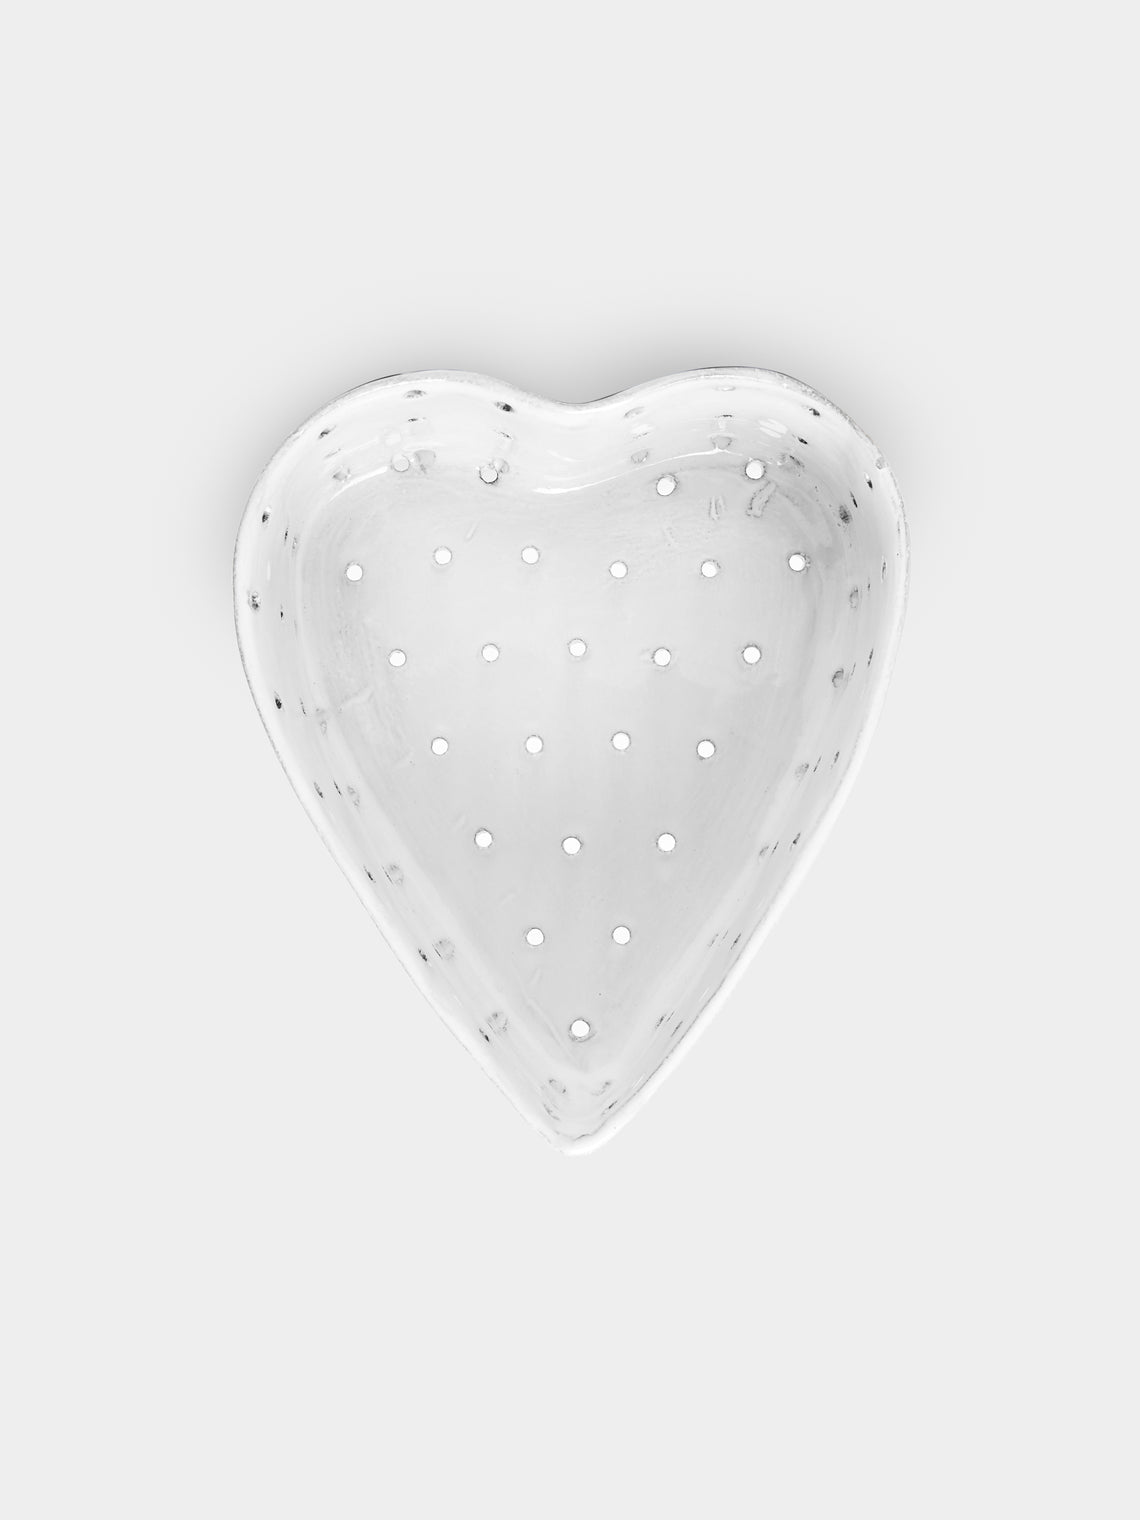 Astier de Villatte - Perforated Heart Dish -  - ABASK - 